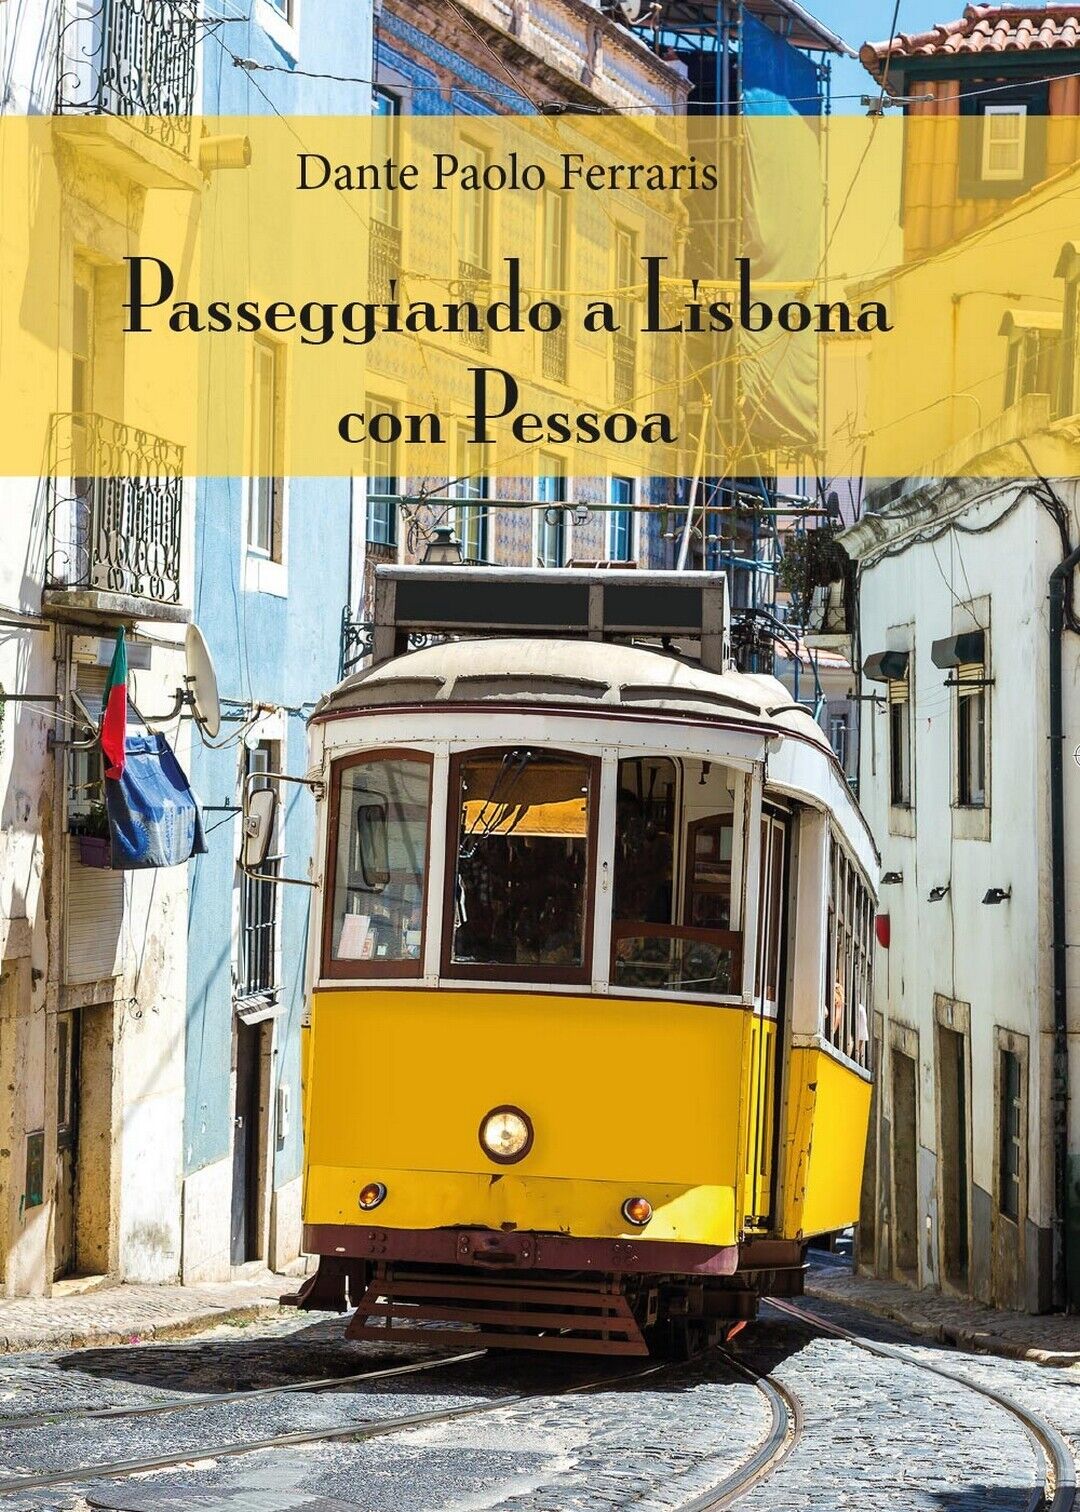 Passeggiando a Lisbona con Pessoa  di Dante Paolo Ferraris,  2016,  Youcanprint